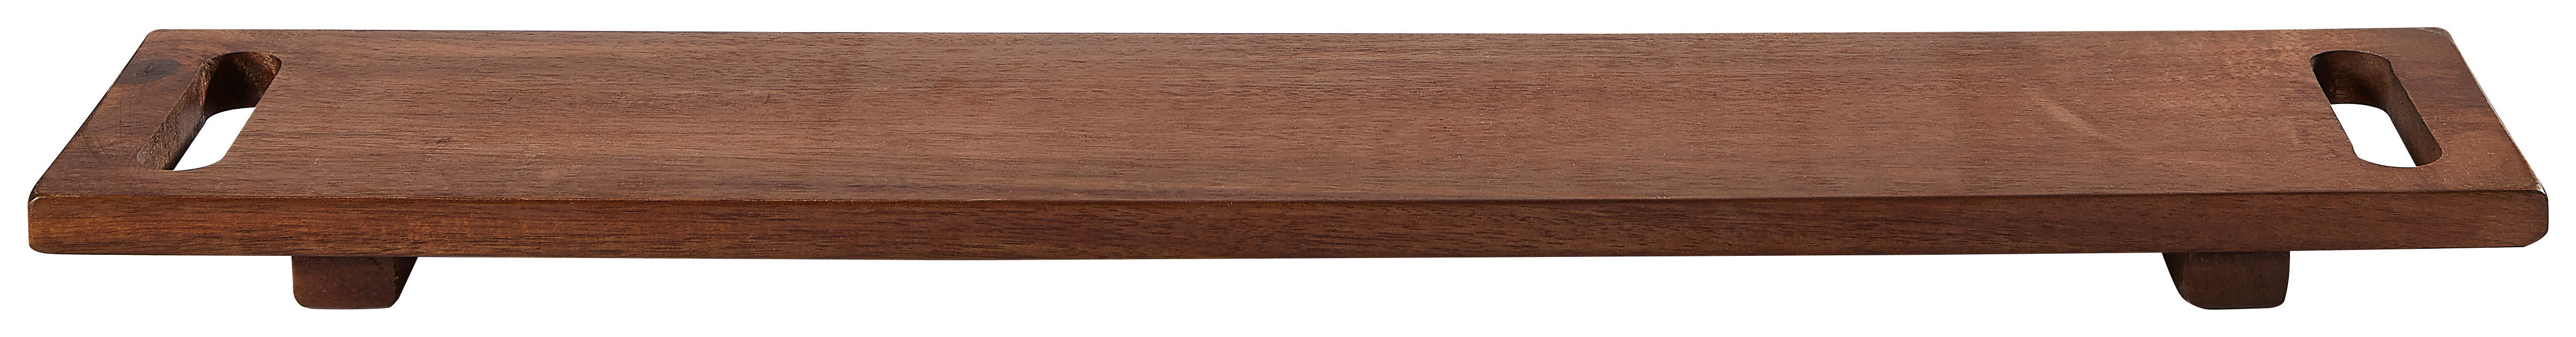 TABLETT Holz Akazie  - Akaziefarben, Holz (60/13/3cm) - ASA